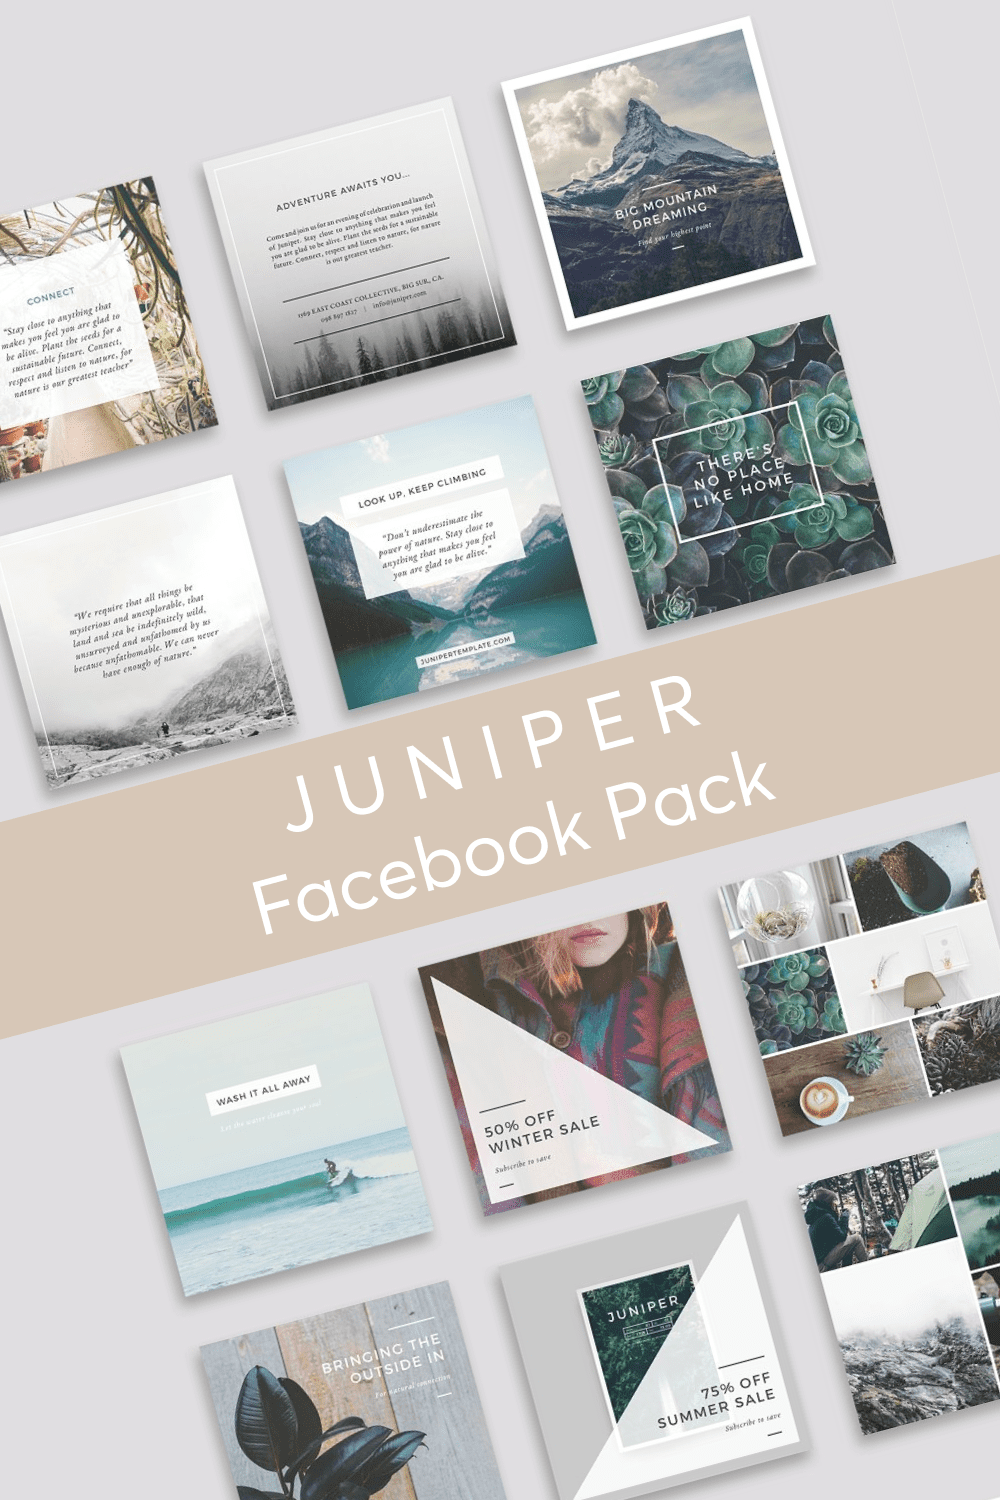 J U N I P E R Facebook Pack - Pinterest.